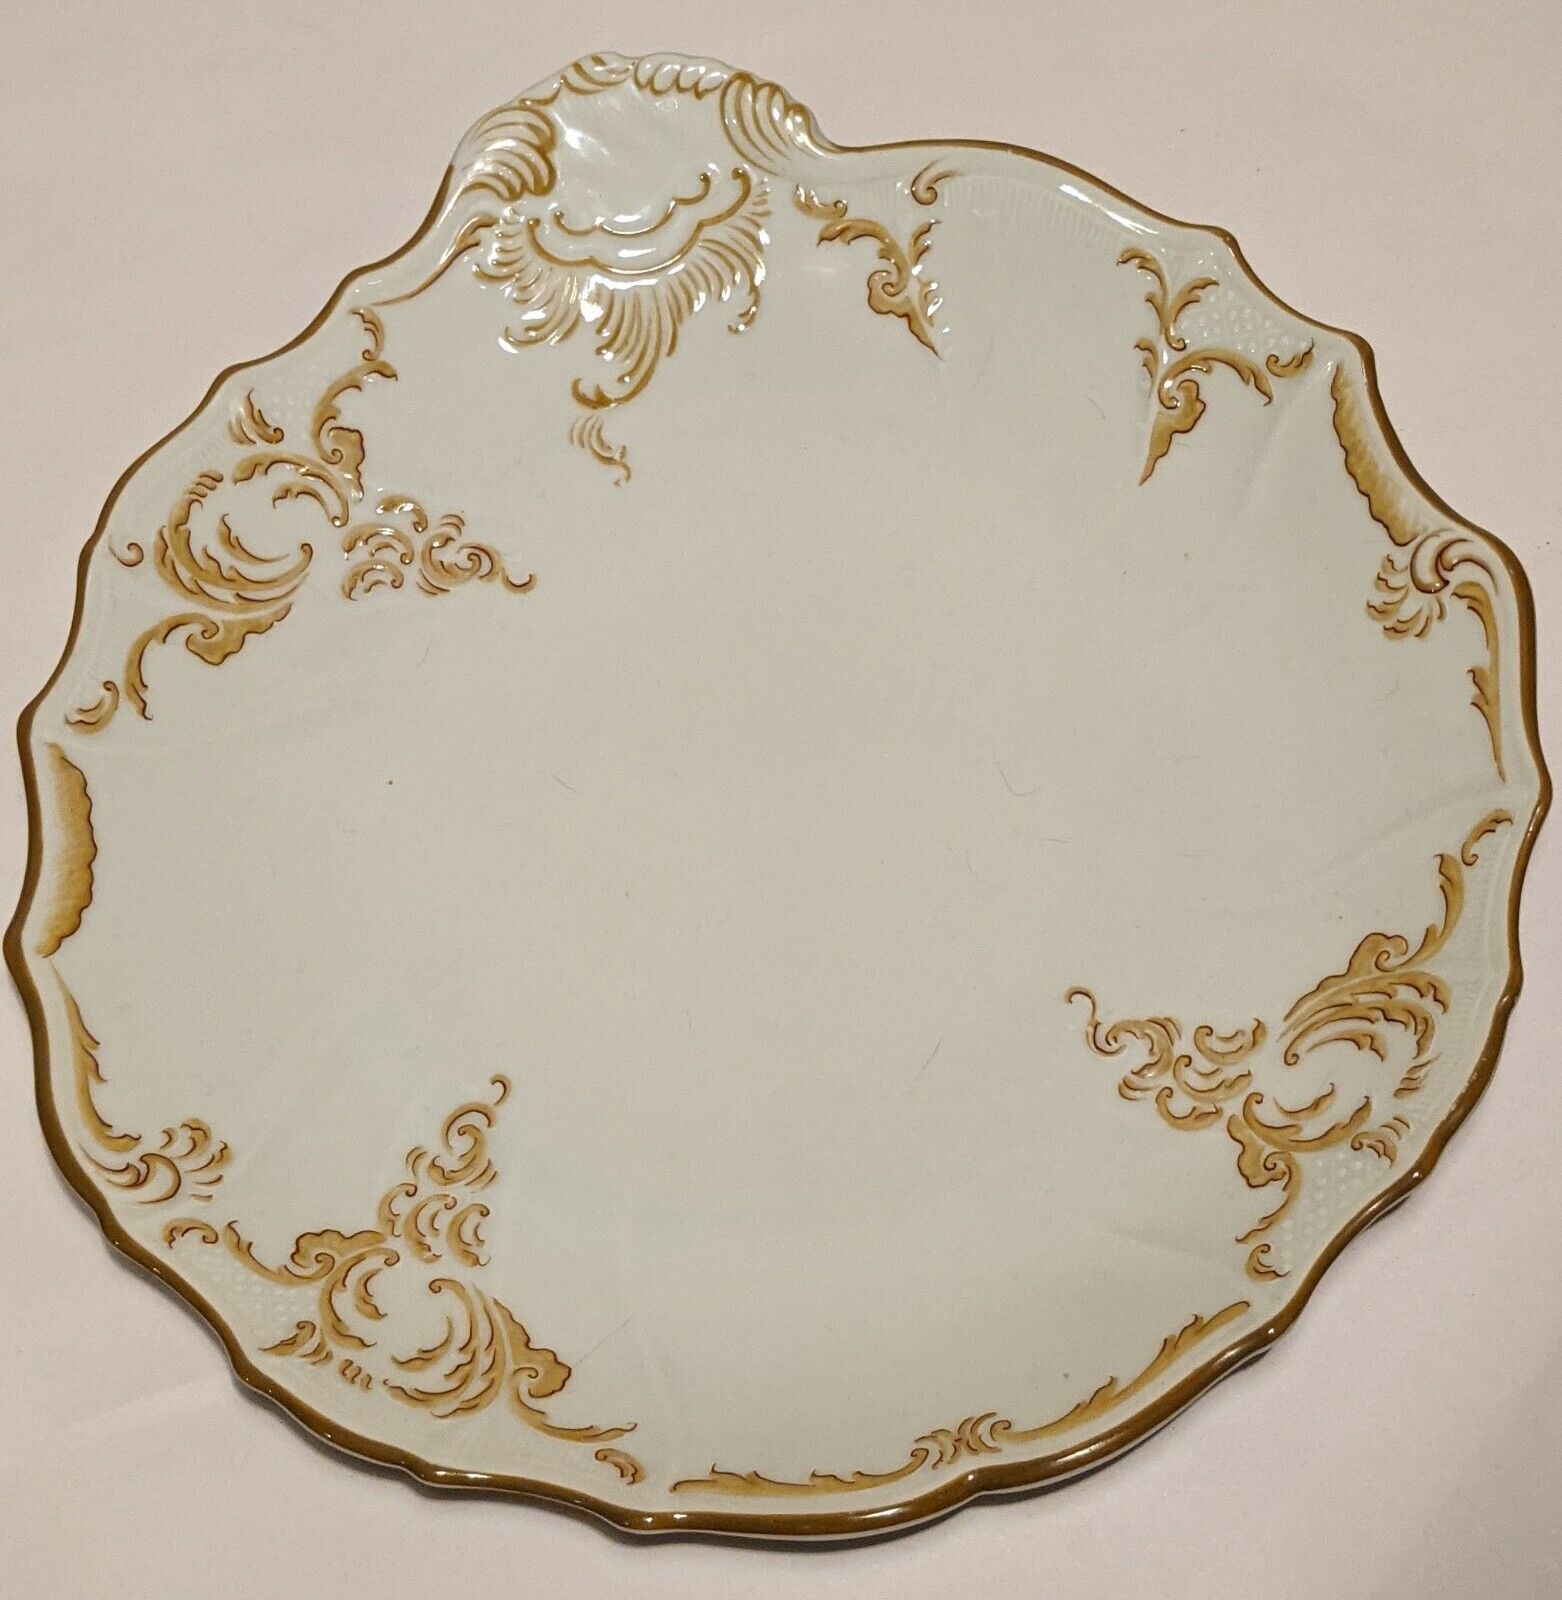 NICE - German Hand-painted Plate Ornate SEE Lovely Vintage